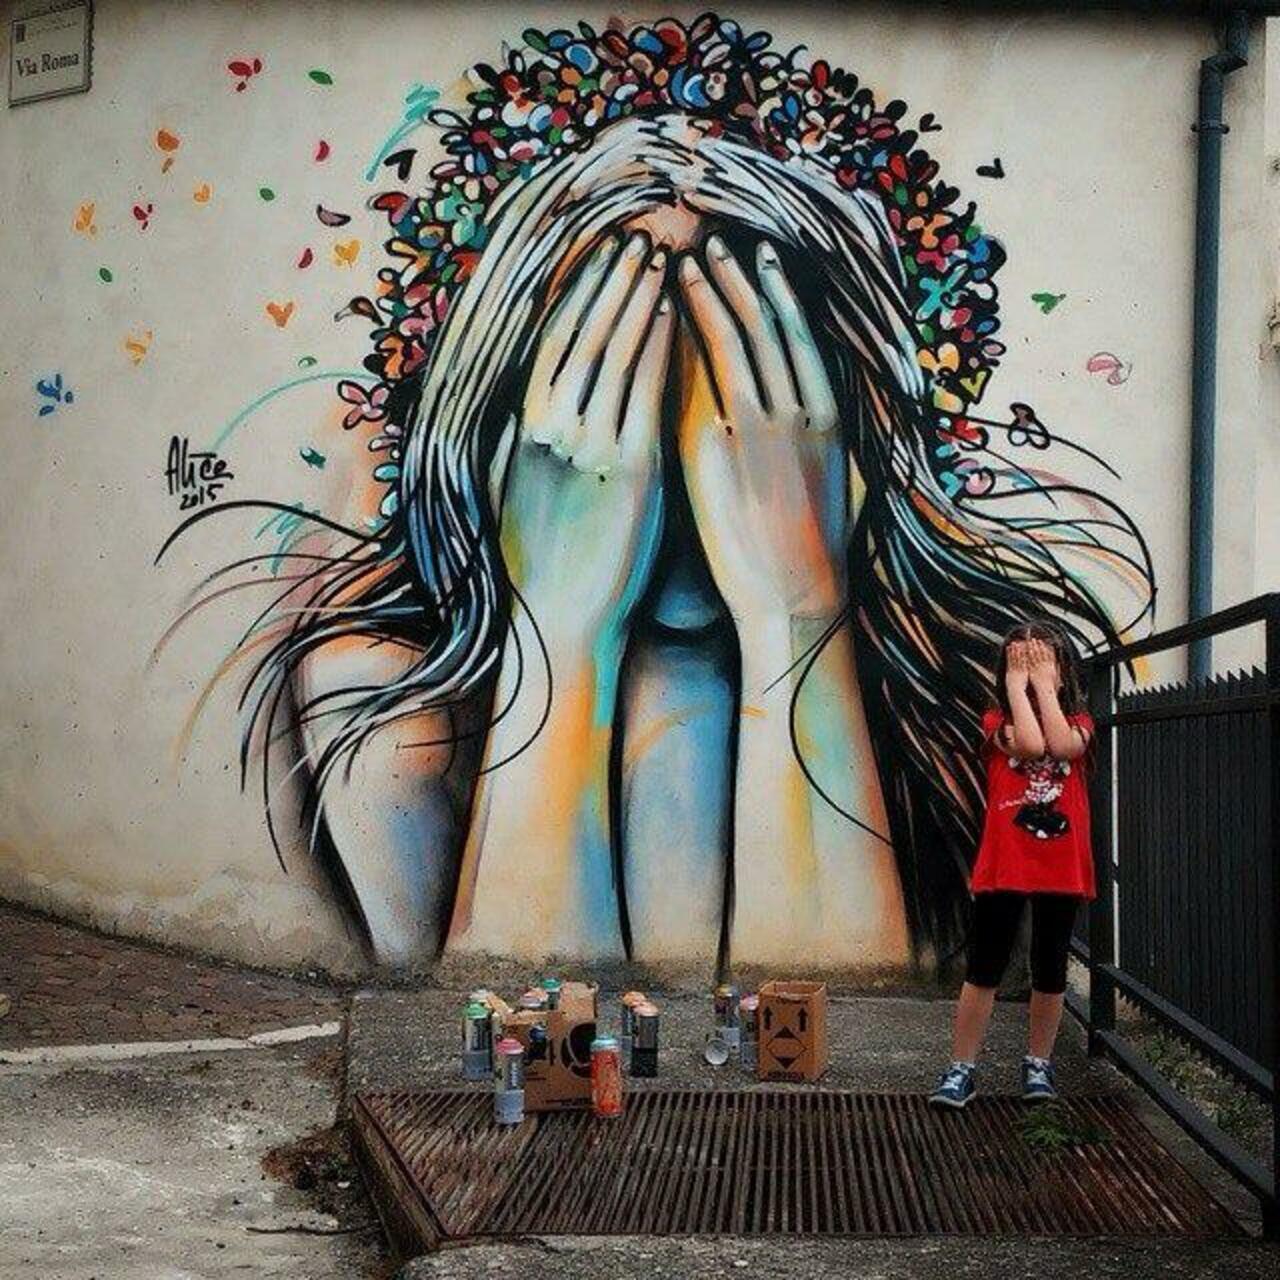 RT @_MxllChloe: New Street Art by Alice Pasquini  

#art #arte #graffiti #streetart http://t.co/mNM6r9XPIq